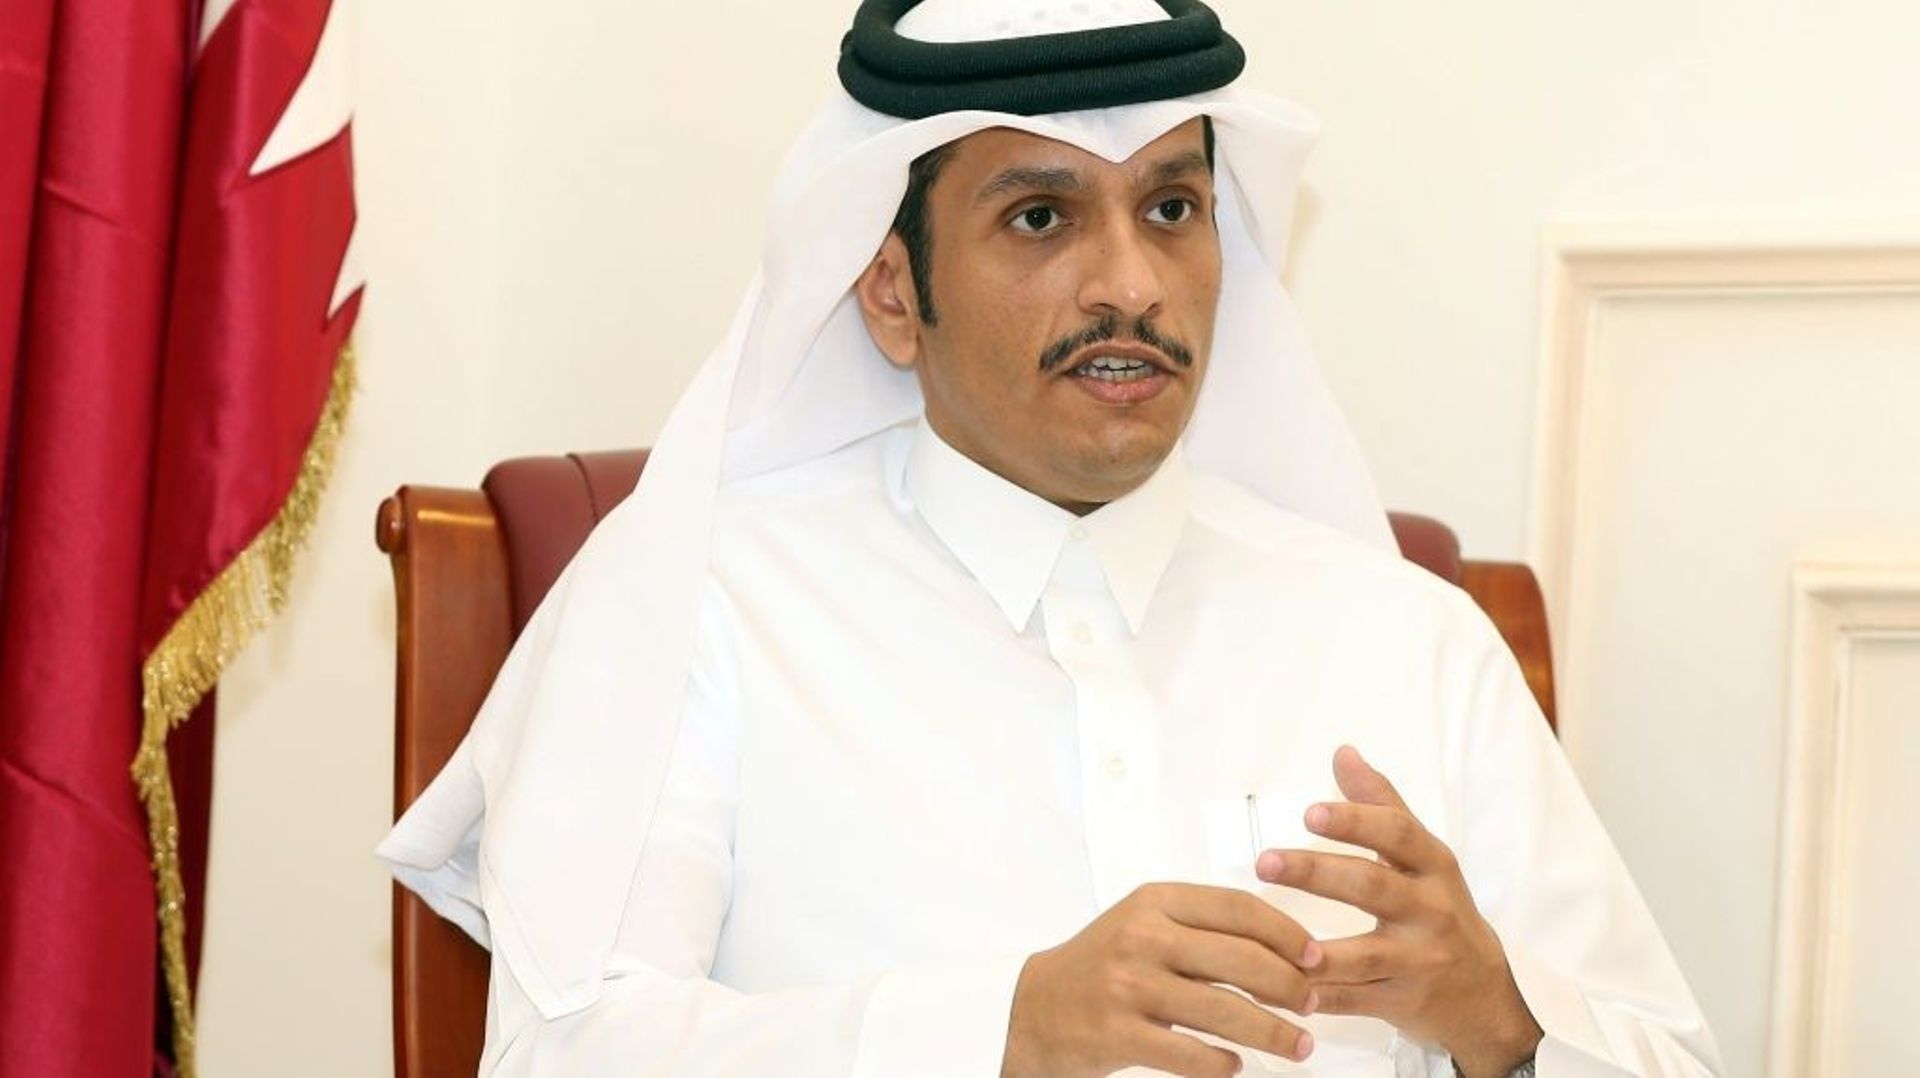 Le cheikh Mohammed ben Abderrahmane Al-Thani, le 8 juin 2017 à Doha